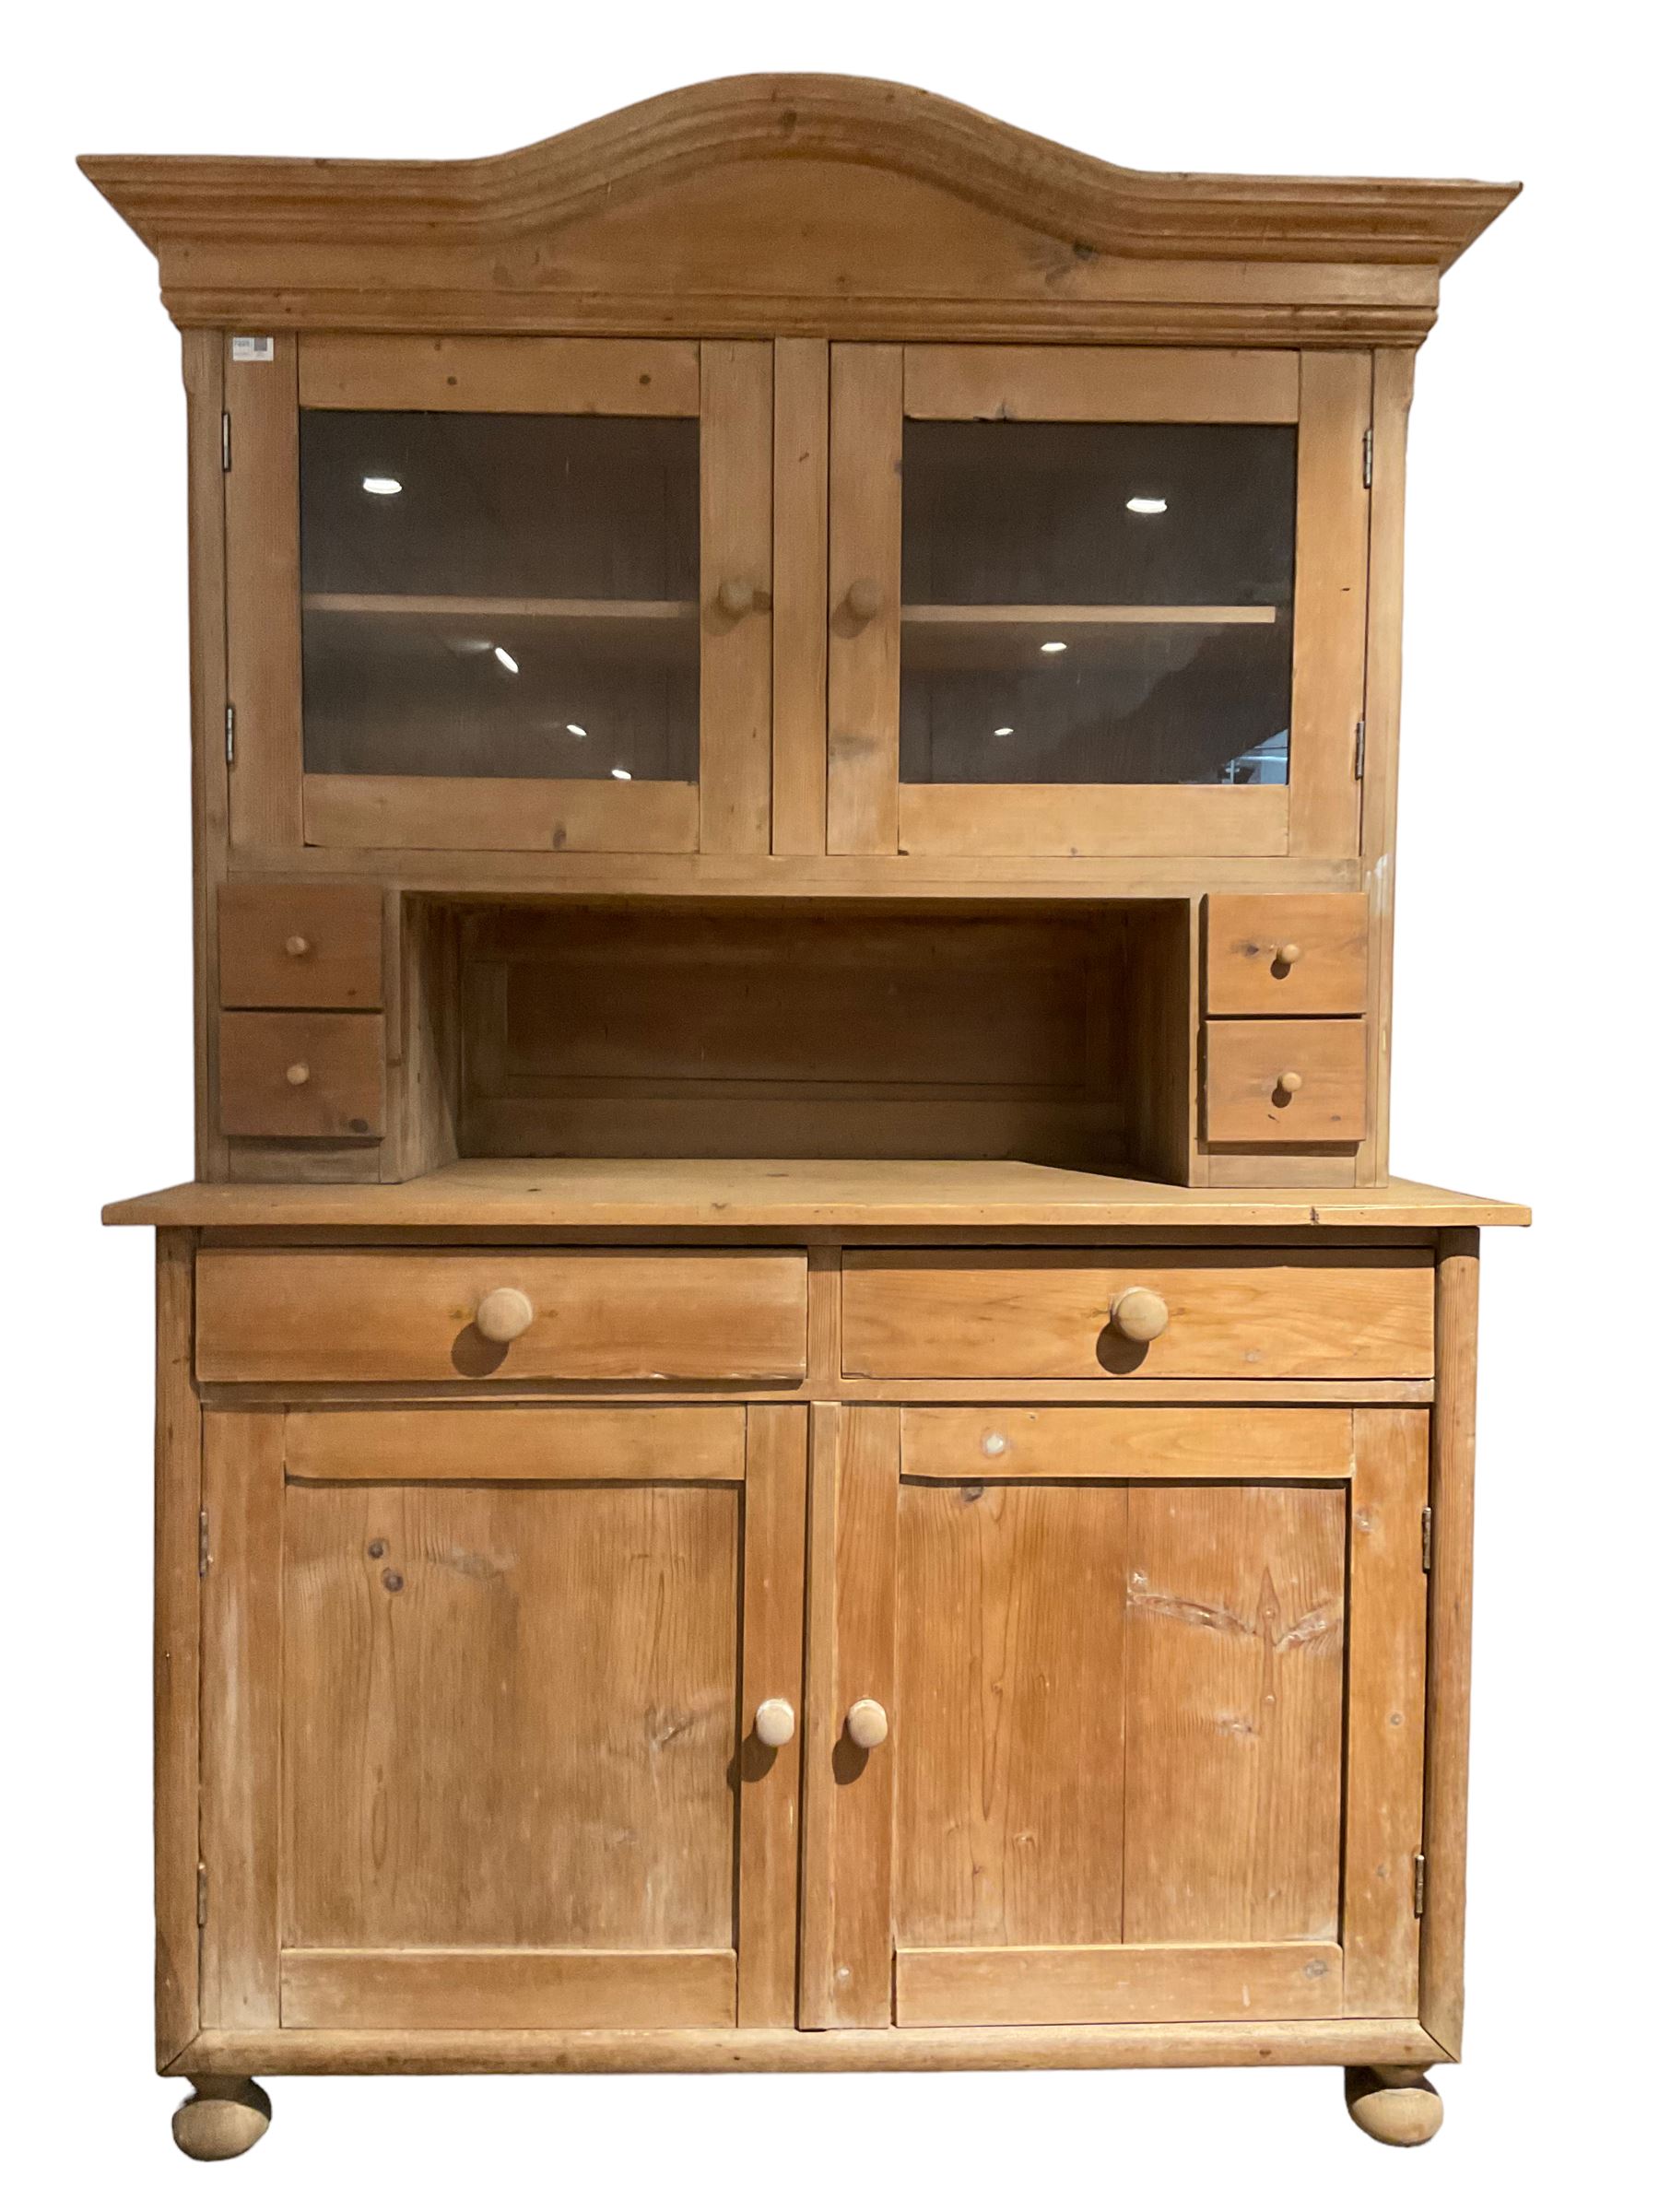 20th century pine dresser - Image 4 of 8